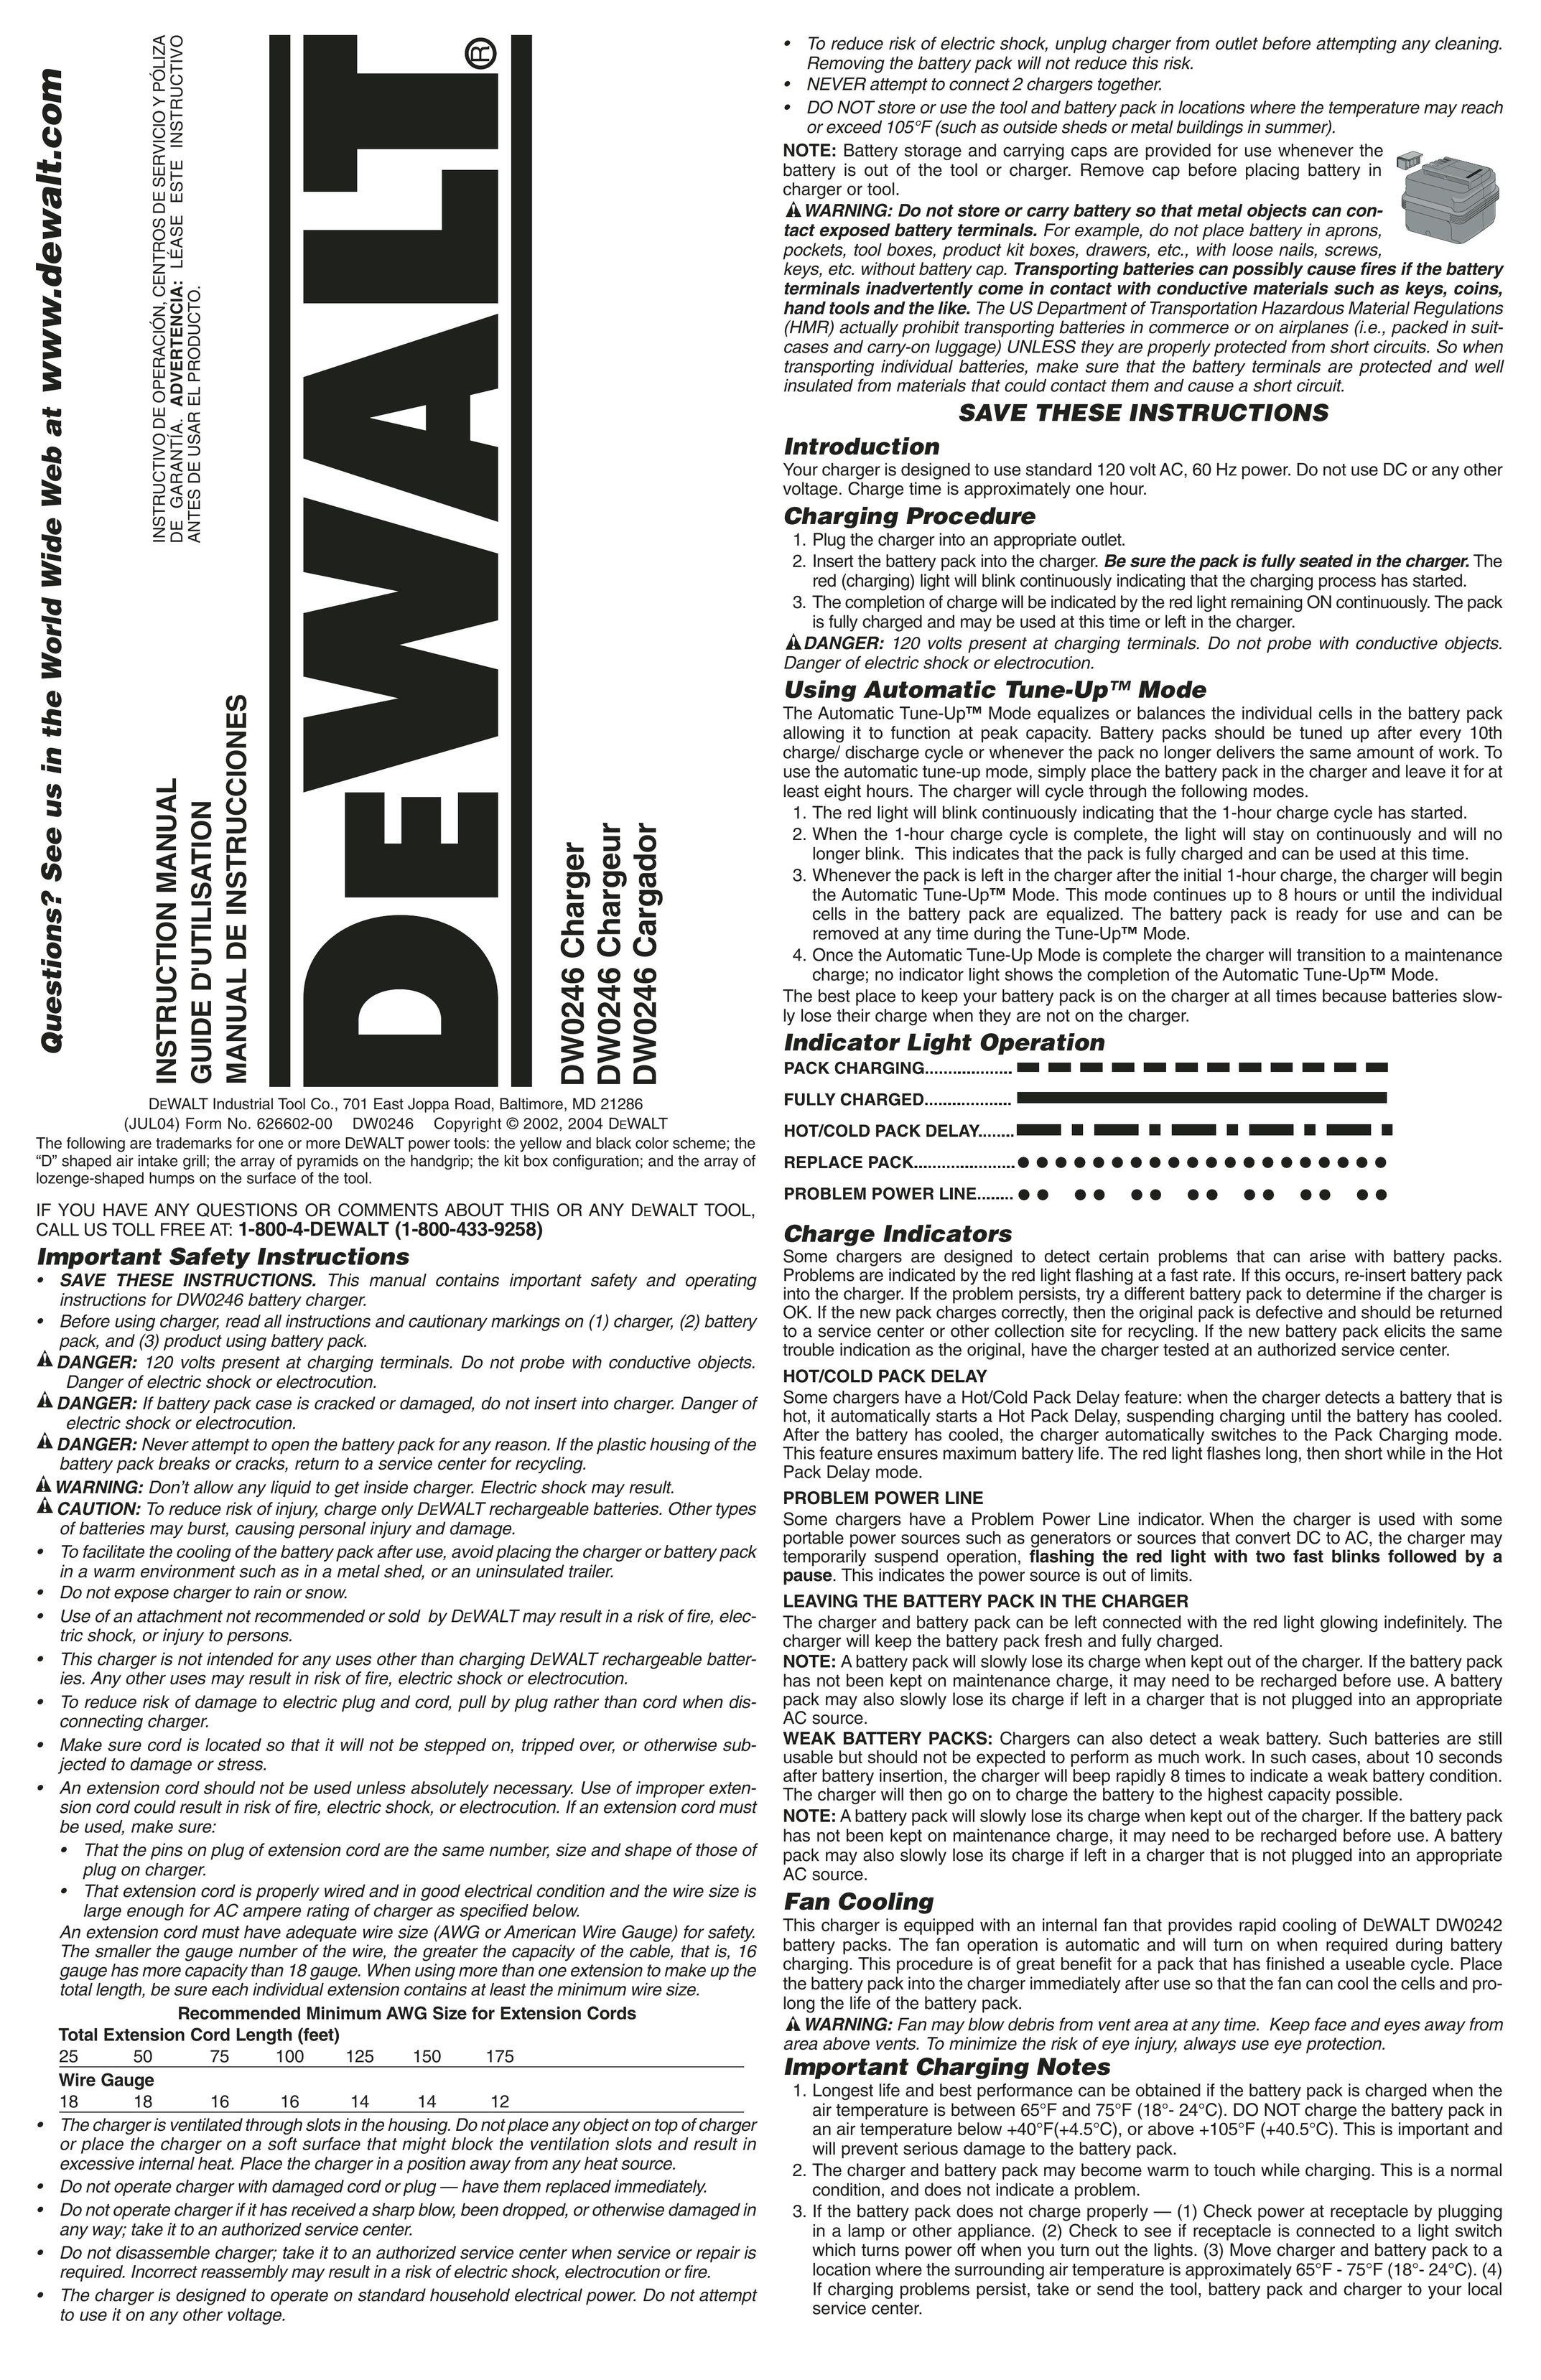 DeWalt DW0246 Battery Charger User Manual